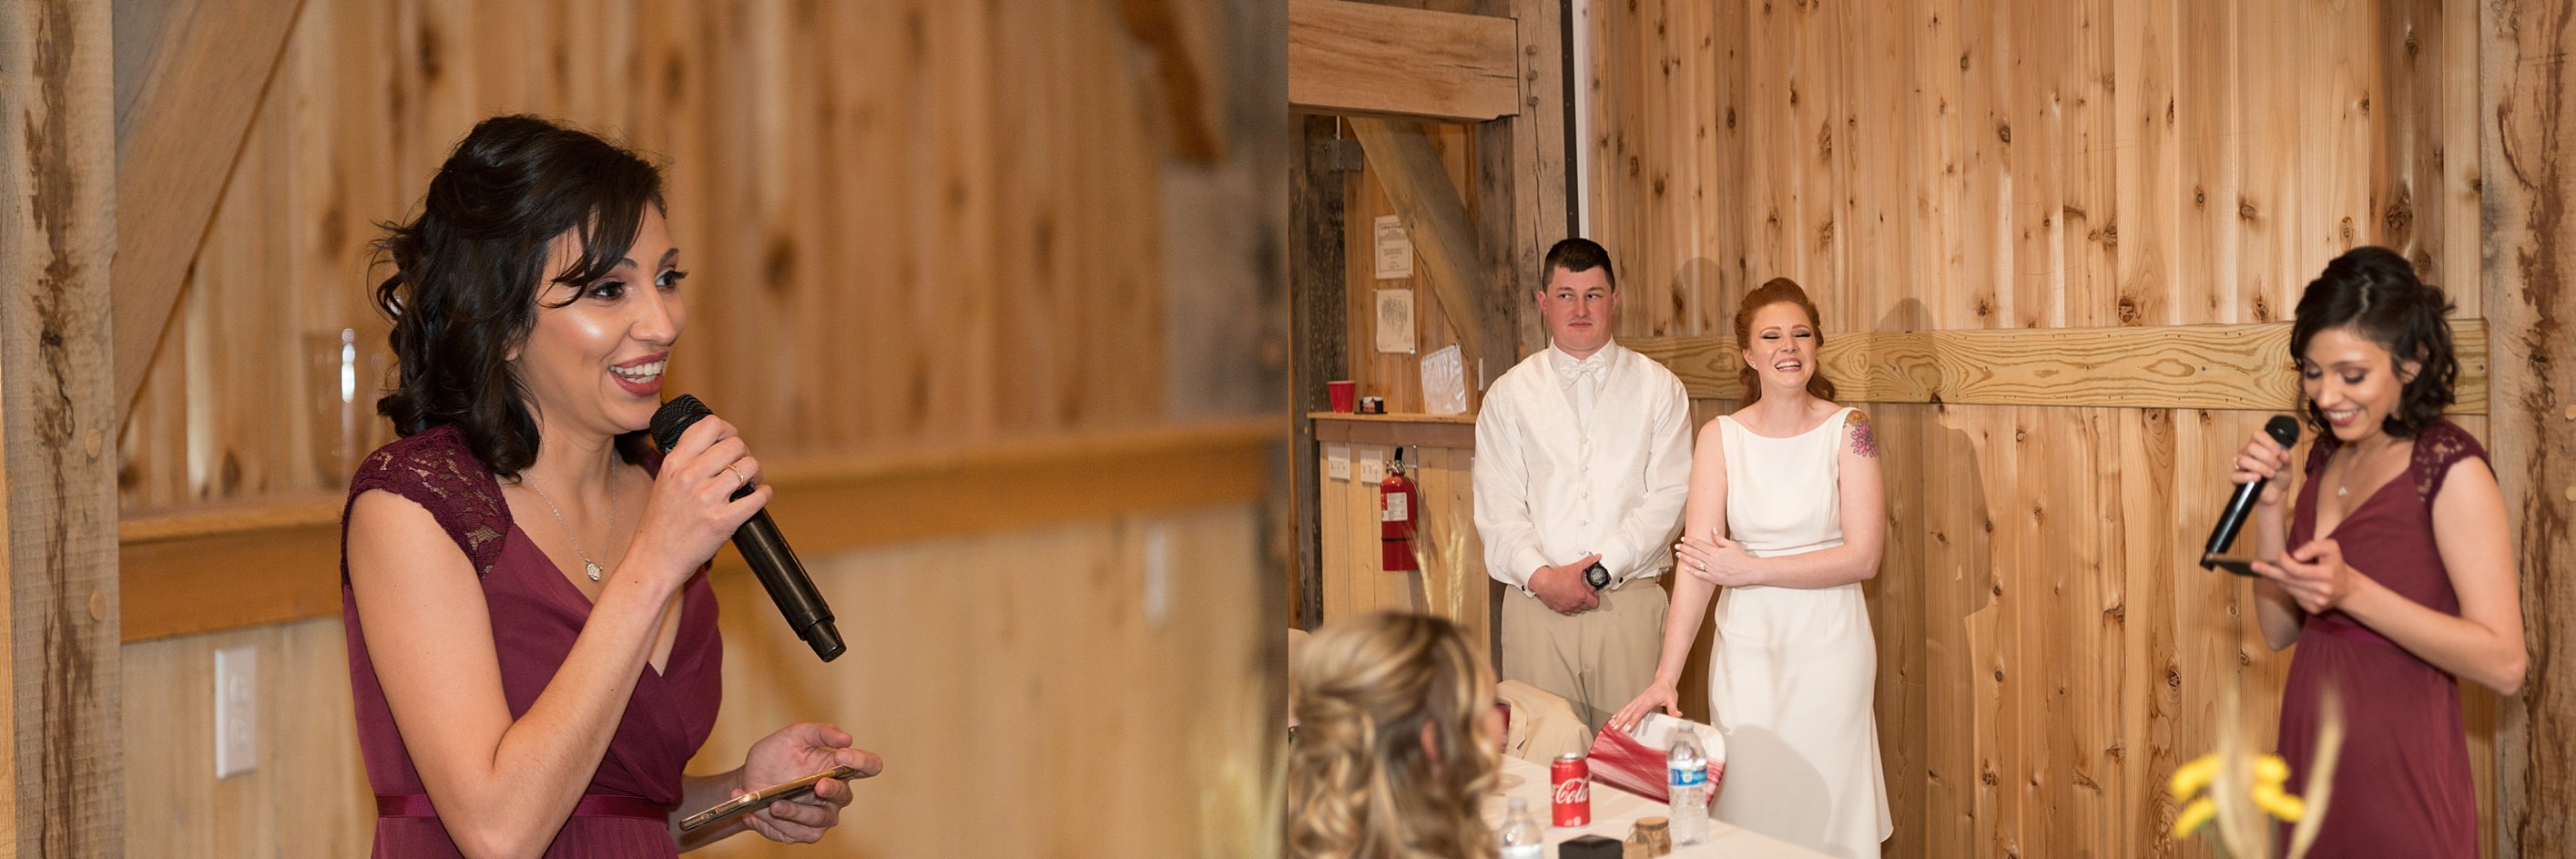 Wedding-Toasts-Photos-The-Barn-at-Kill-Creek-Wedding-Photos-De-Soto-KS-Emily-Lynn-Photography